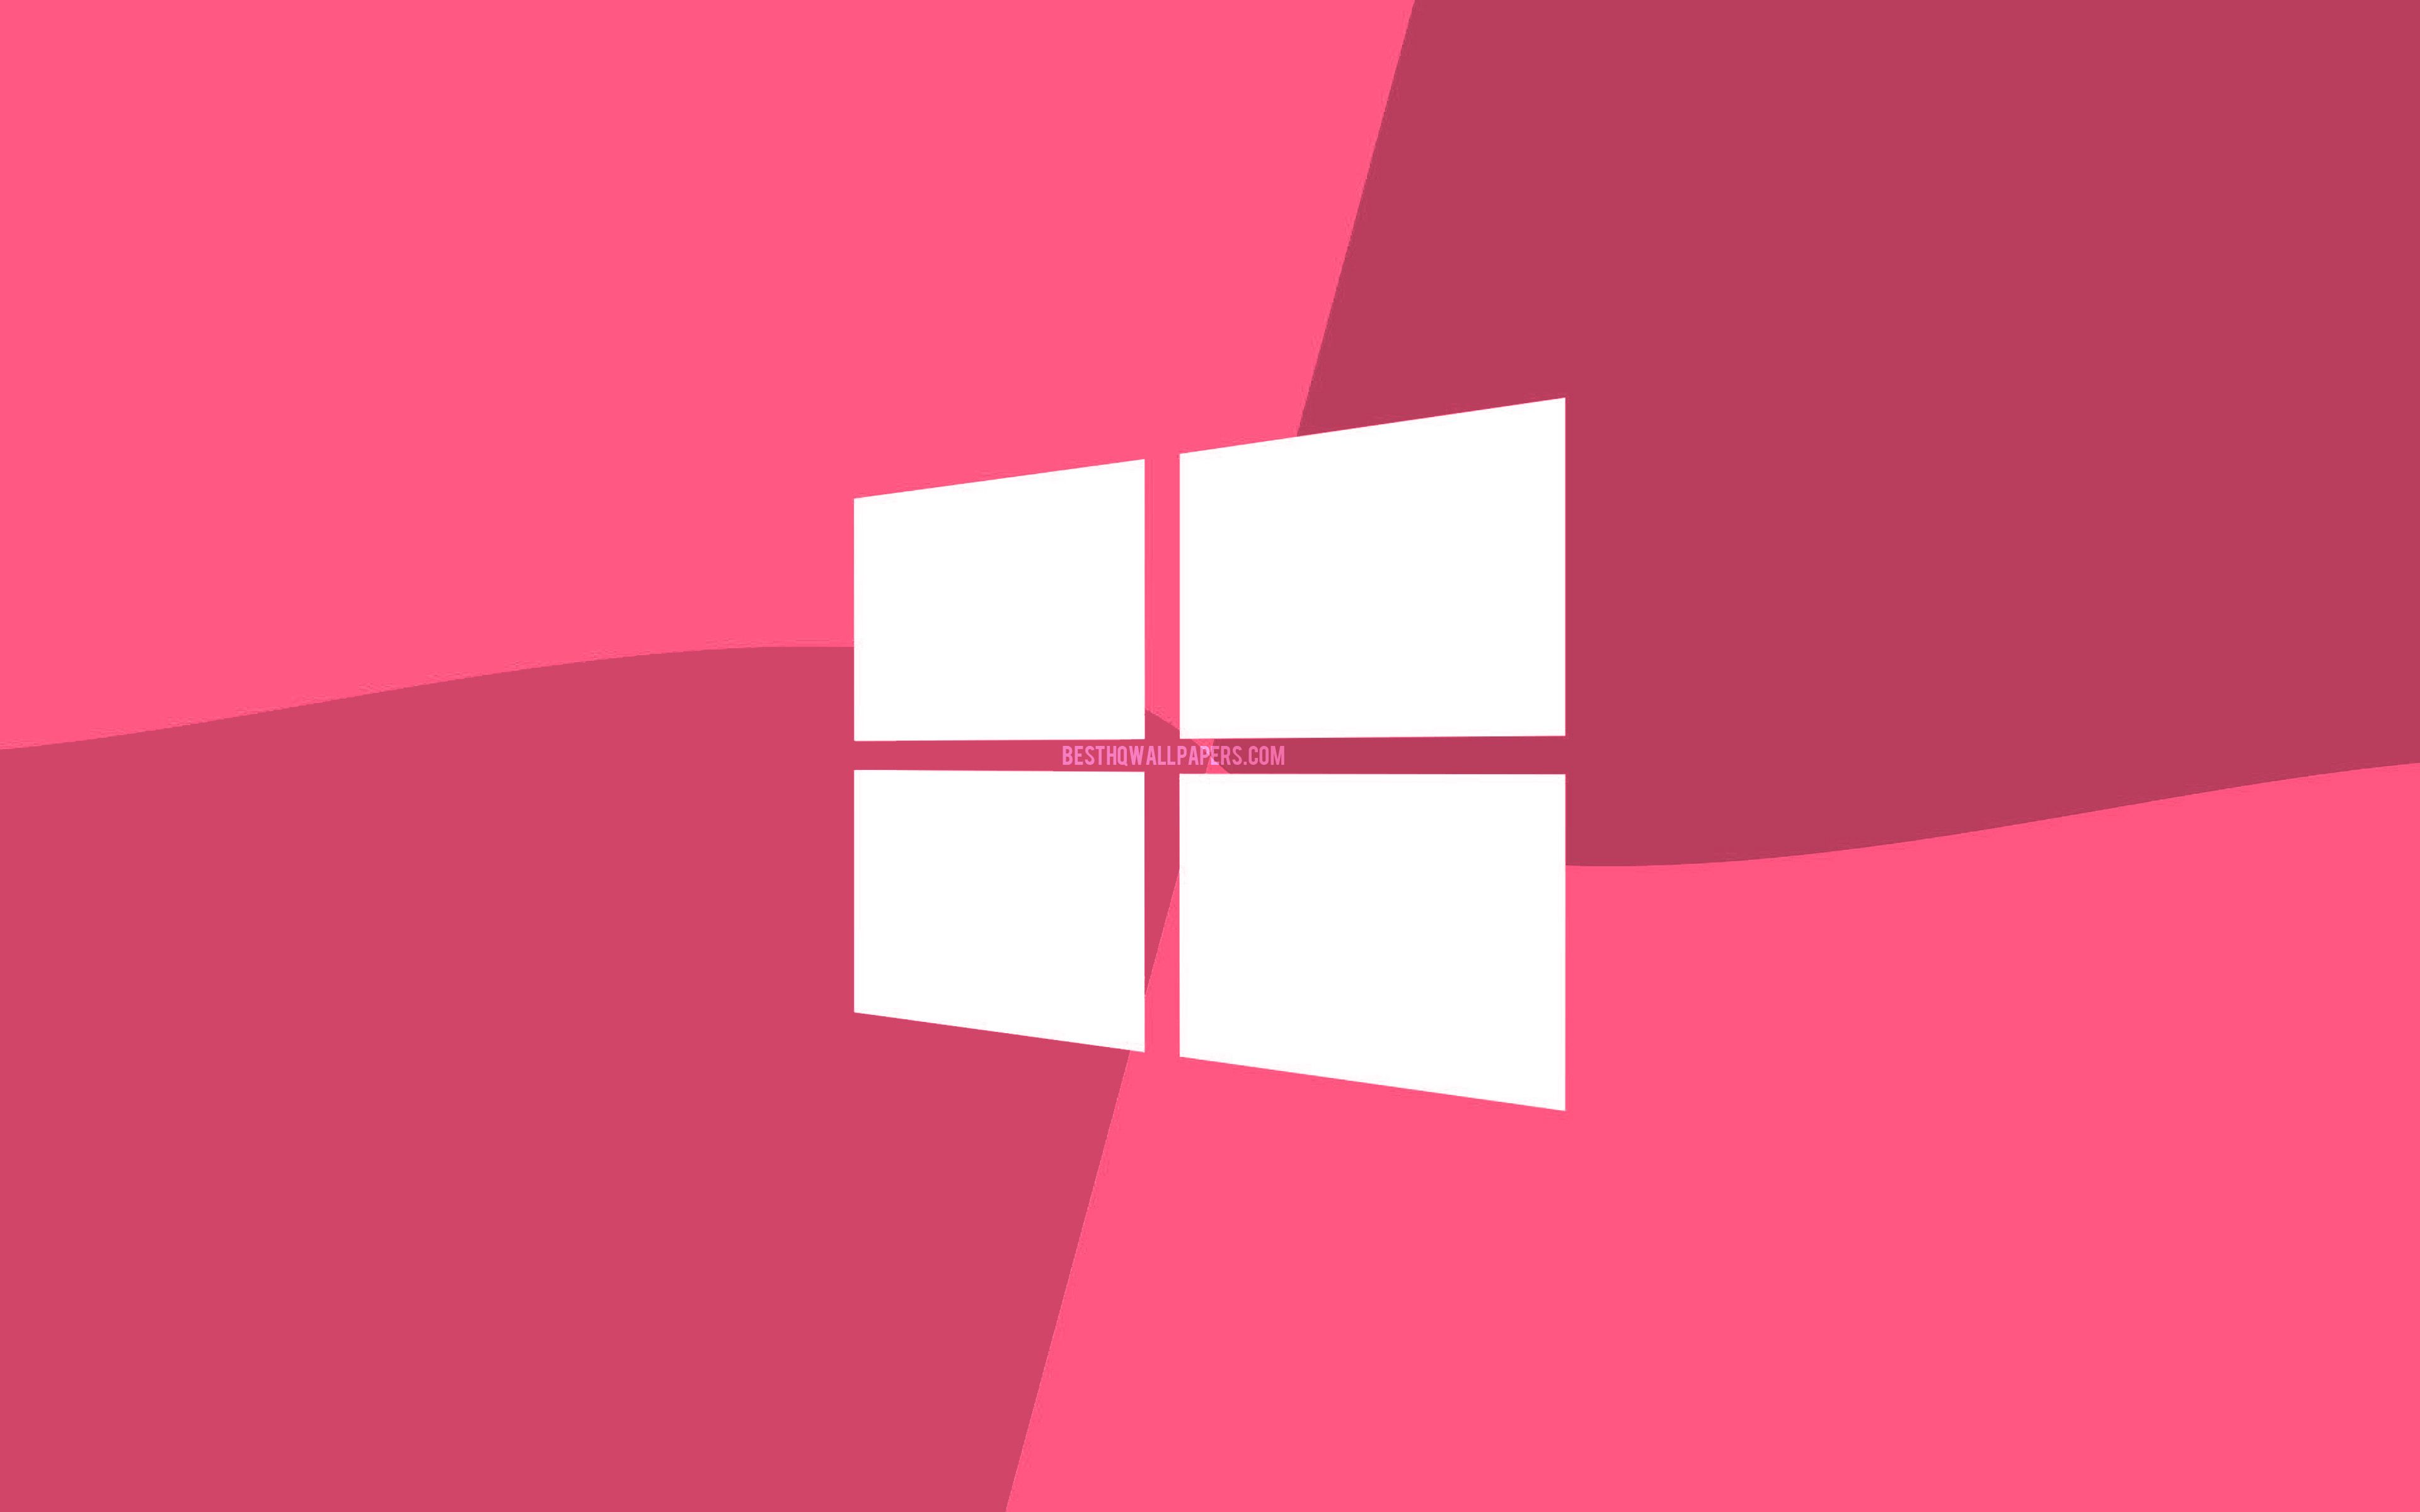 Download wallpaper Windows 10 pink logo, 4k, Microsoft logo, minimal, OS, pink background, creative, Windows artwork, Windows 10 logo for desktop with resolution 3840x2400. High Quality HD picture wallpaper